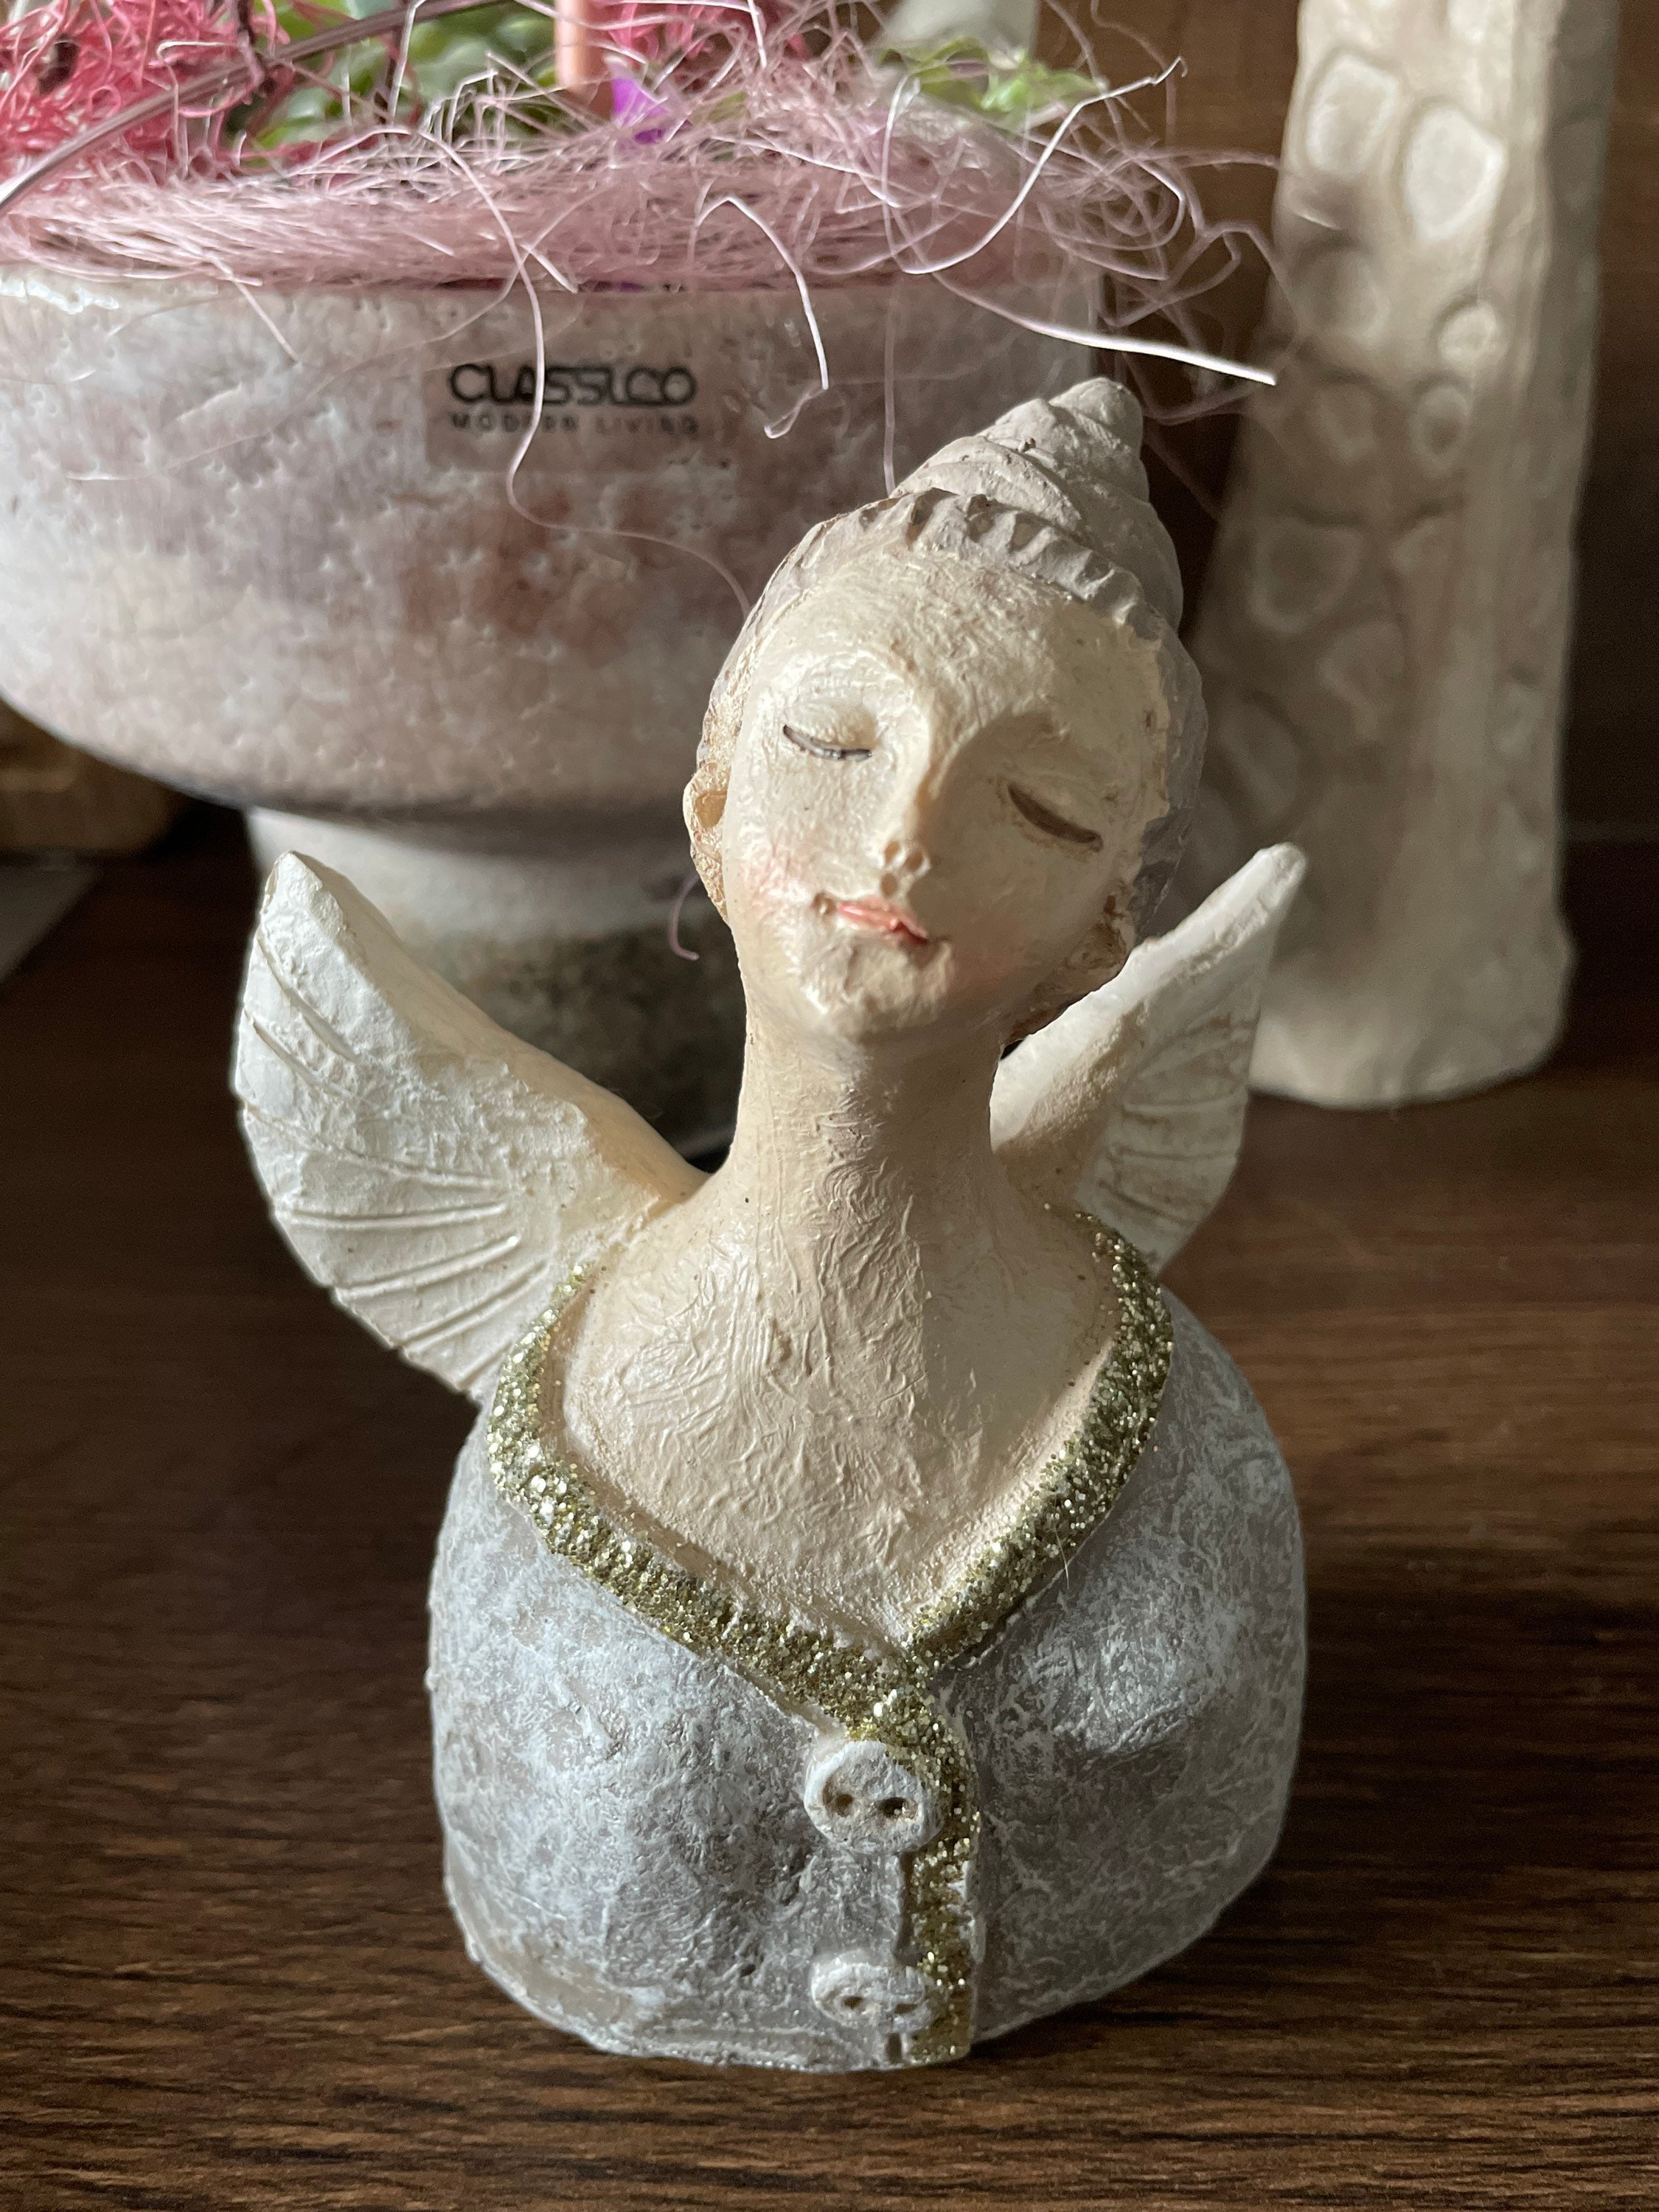 Concrete Casting Latex Mold Angel Lady 13 cm x 9 cm x 6 cm | Etsy